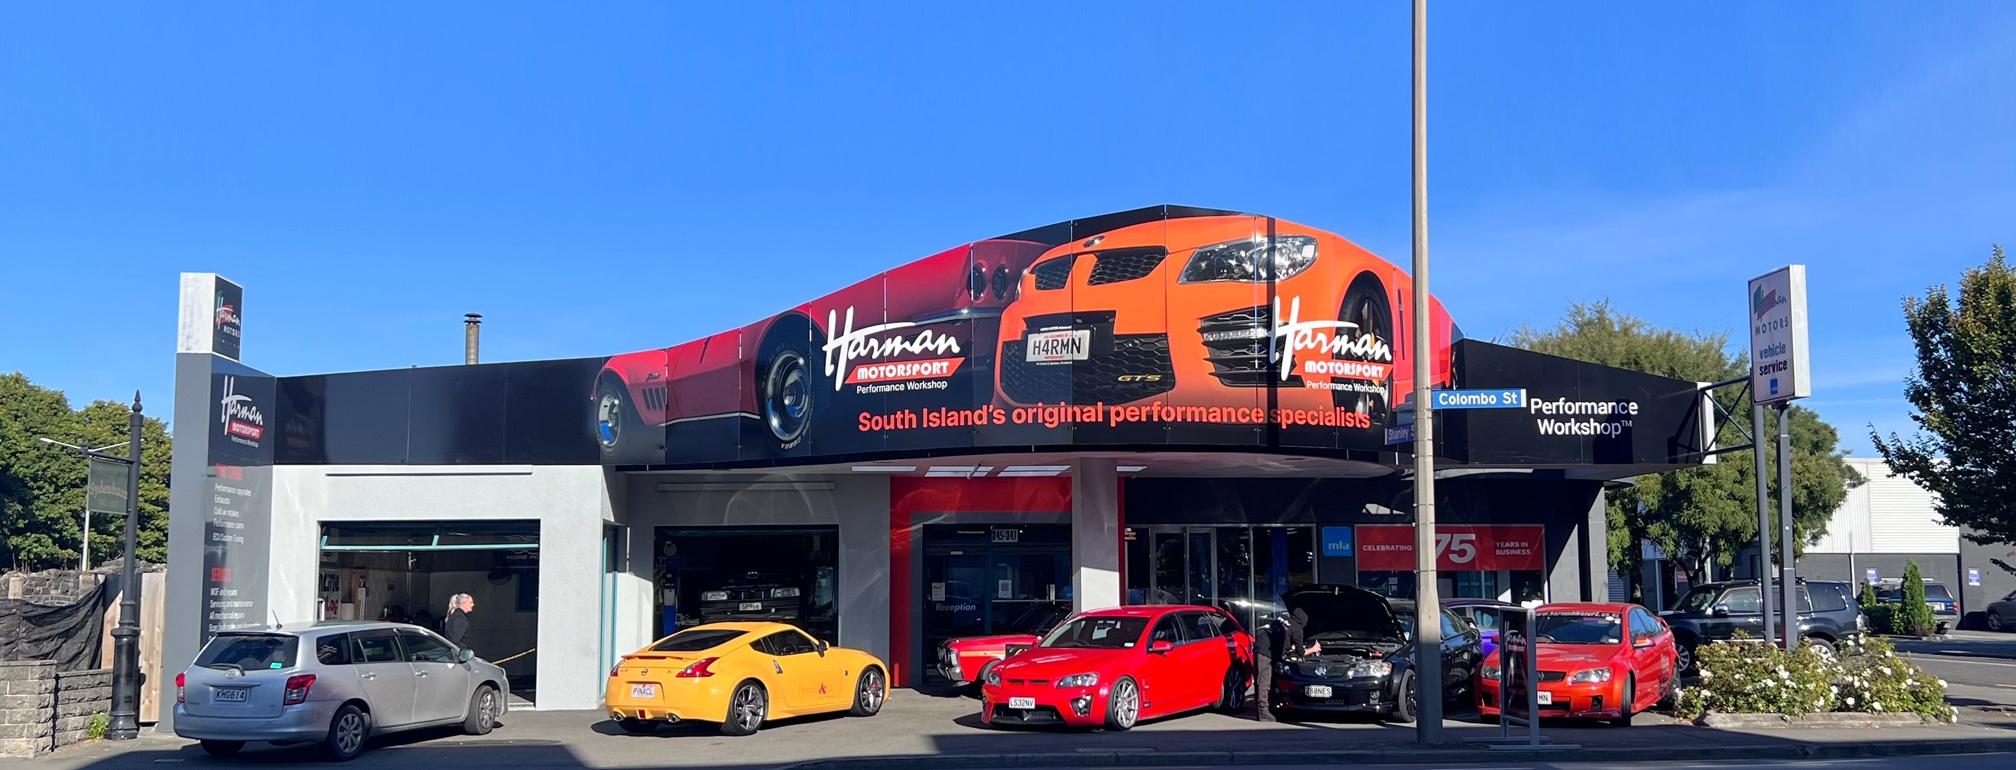 Harman Motorsport Signage Christchurch Marketing Agency